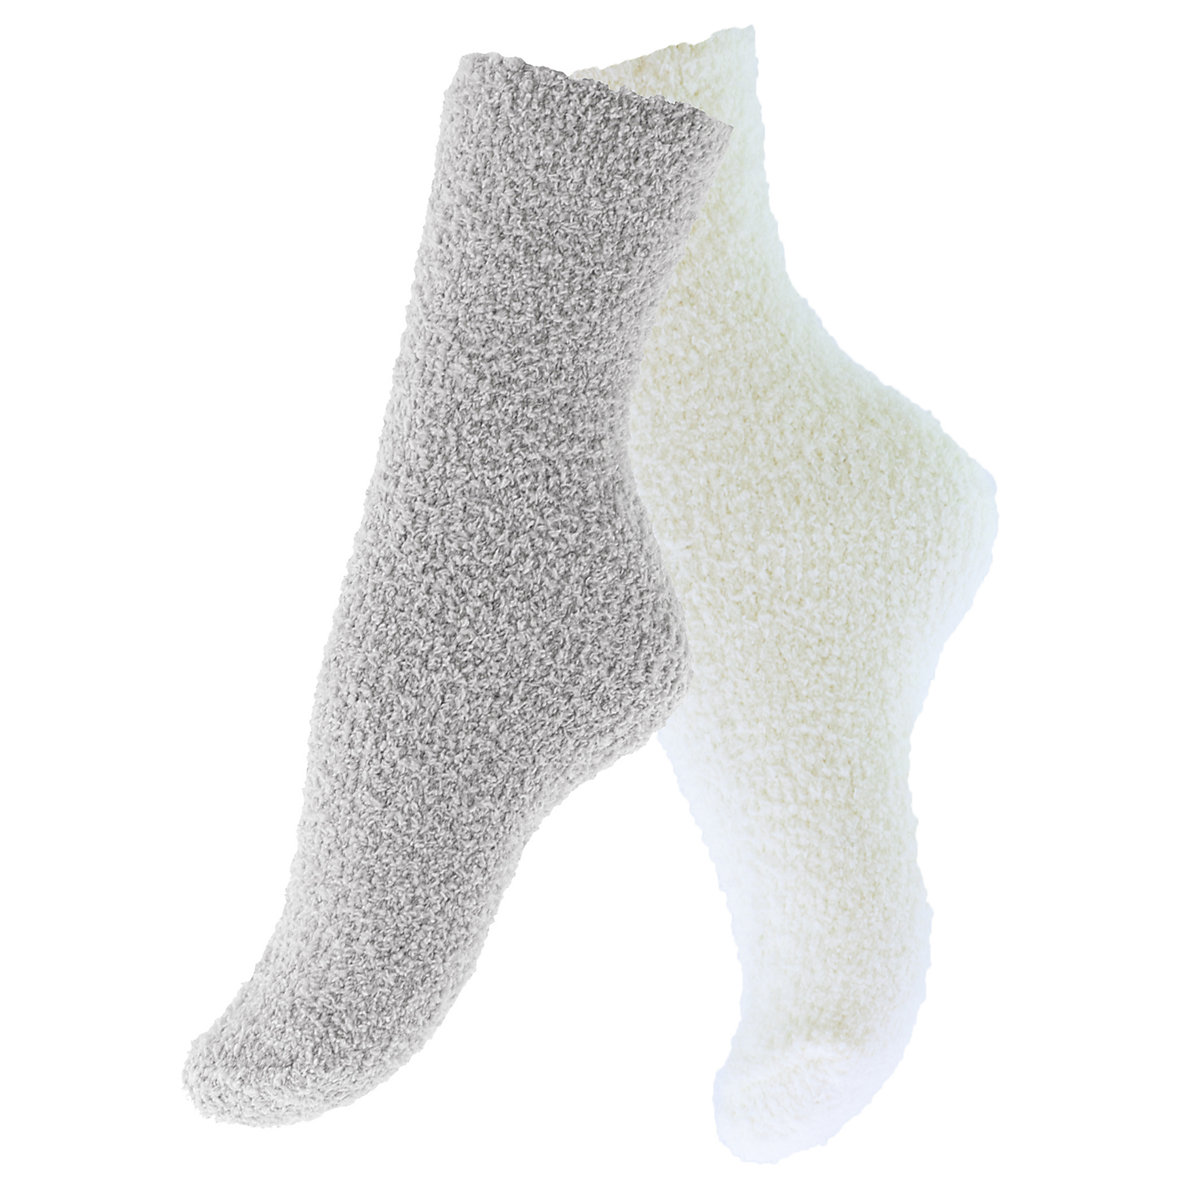 yenita® Kuschelsocken 4 Paar Socken grau/weiß